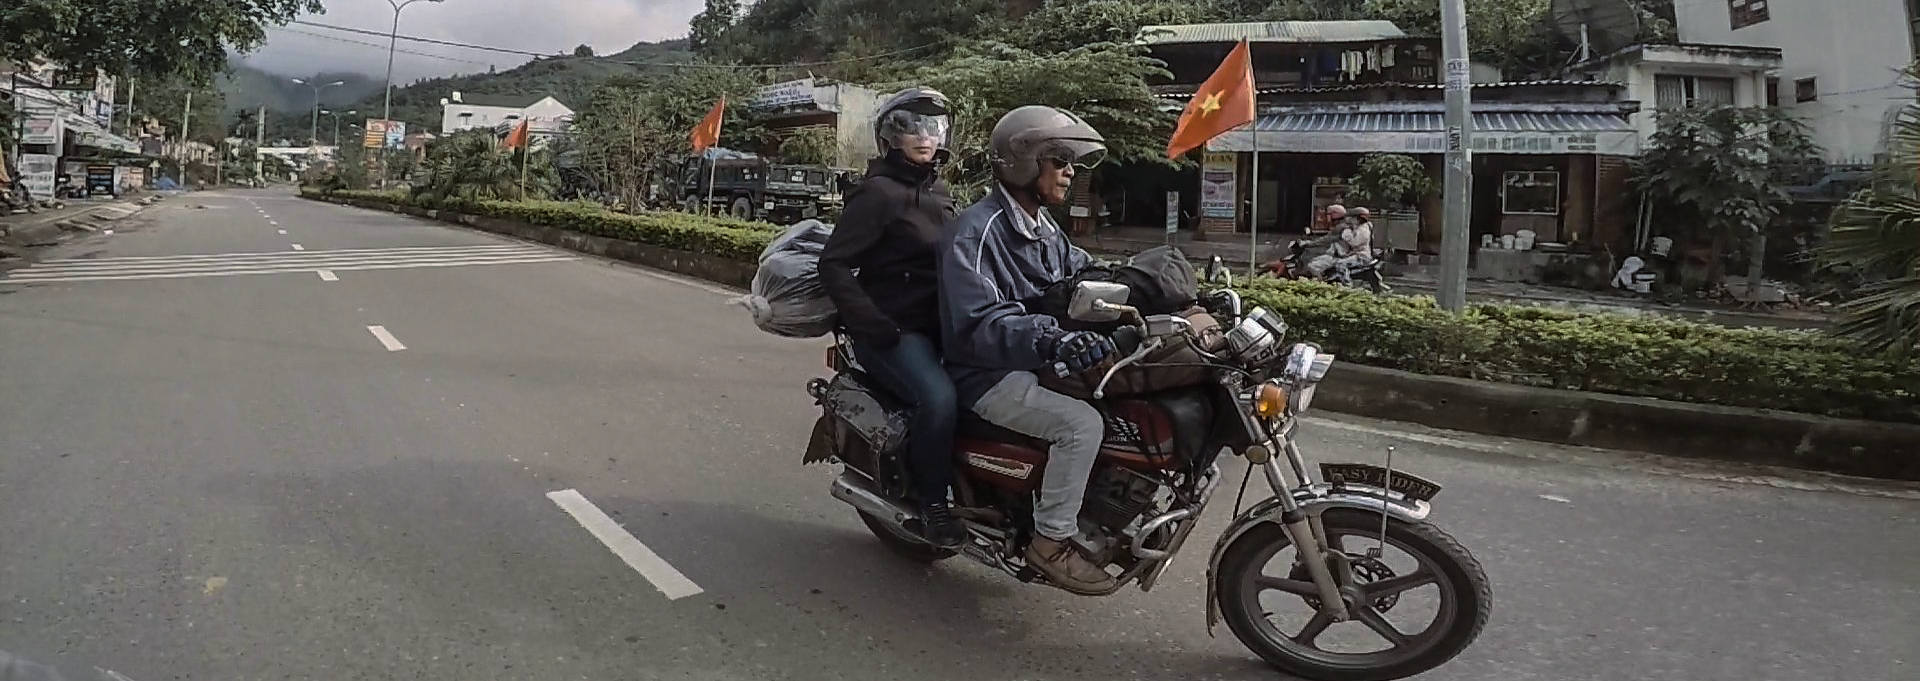 Easy Rider Vietnam Mogroach